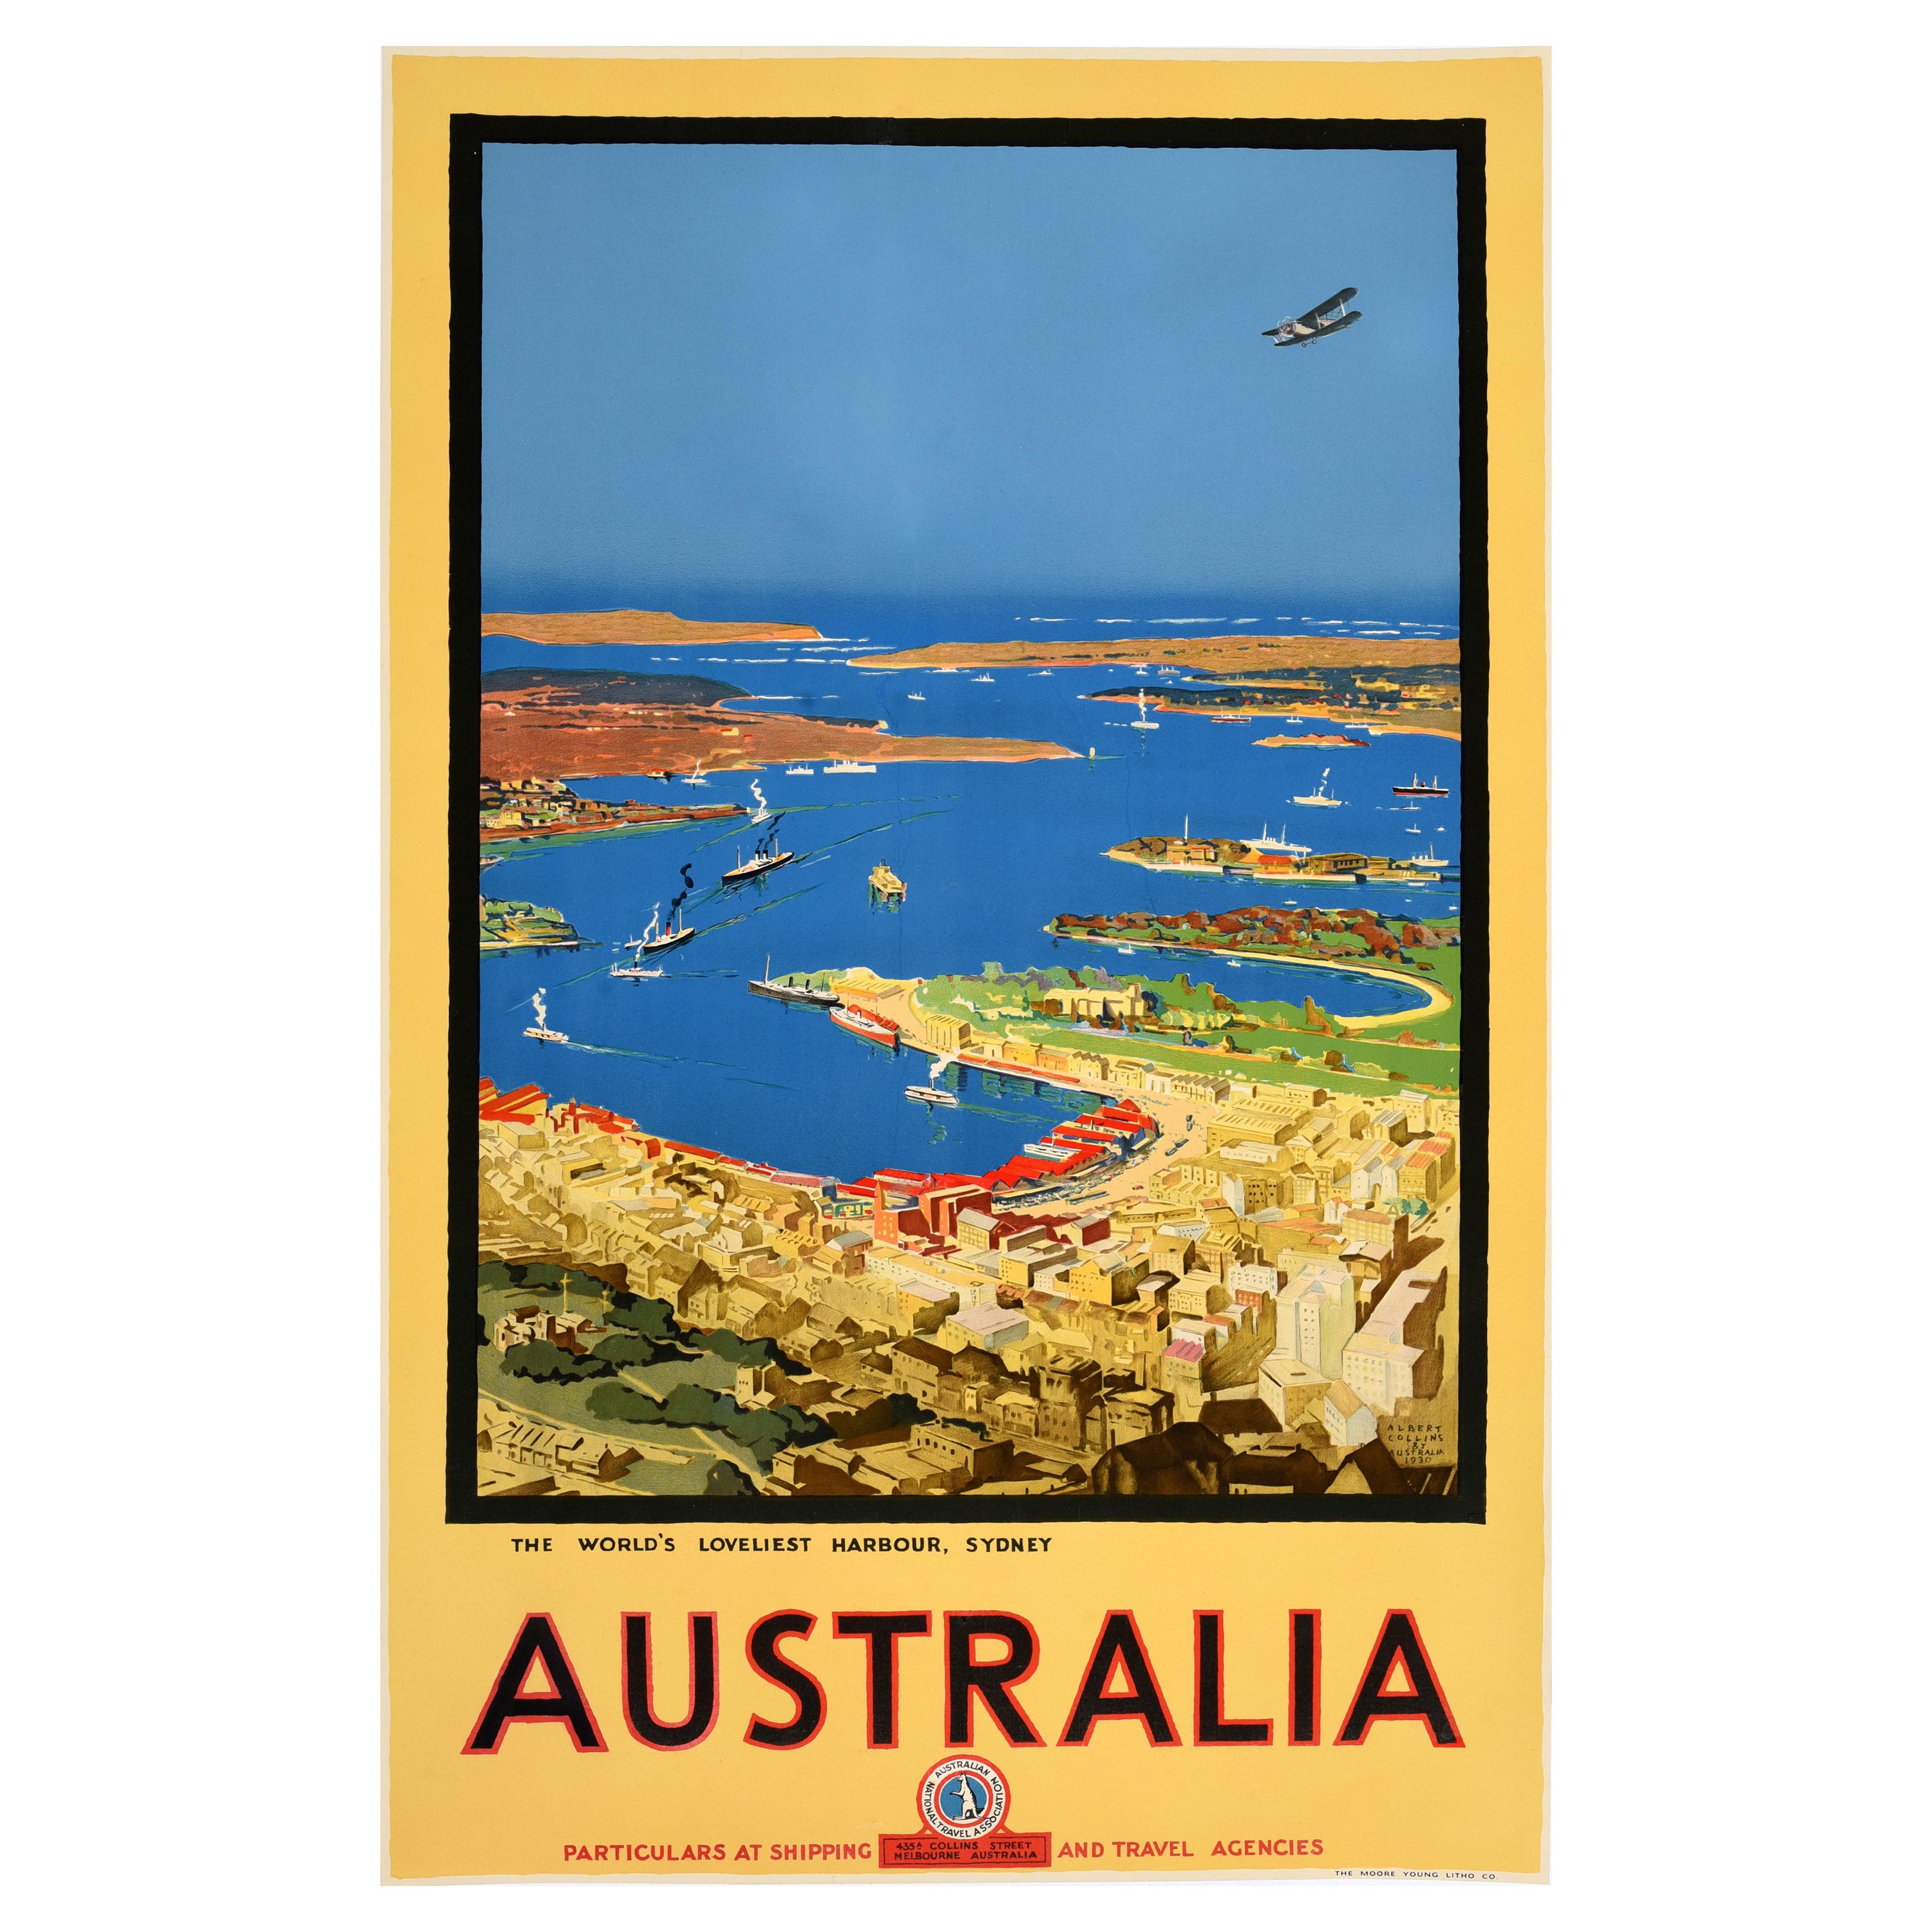 Original Vintage Travel Poster Australia Sydney Loveliest Harbour Art Deco